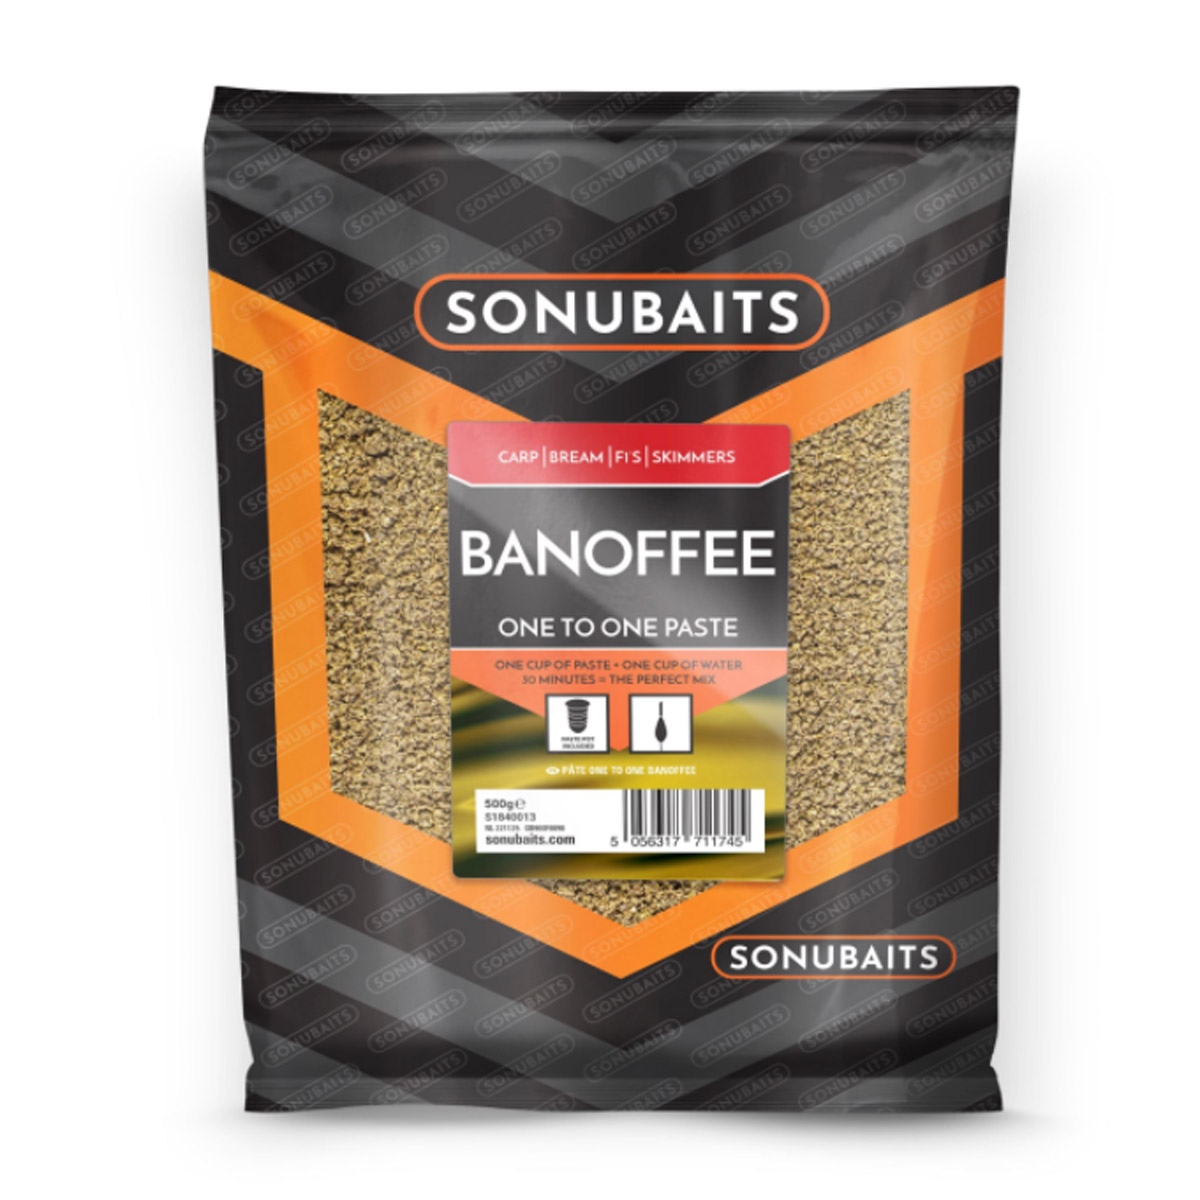 Sonubaits One To One Paste Banoffee